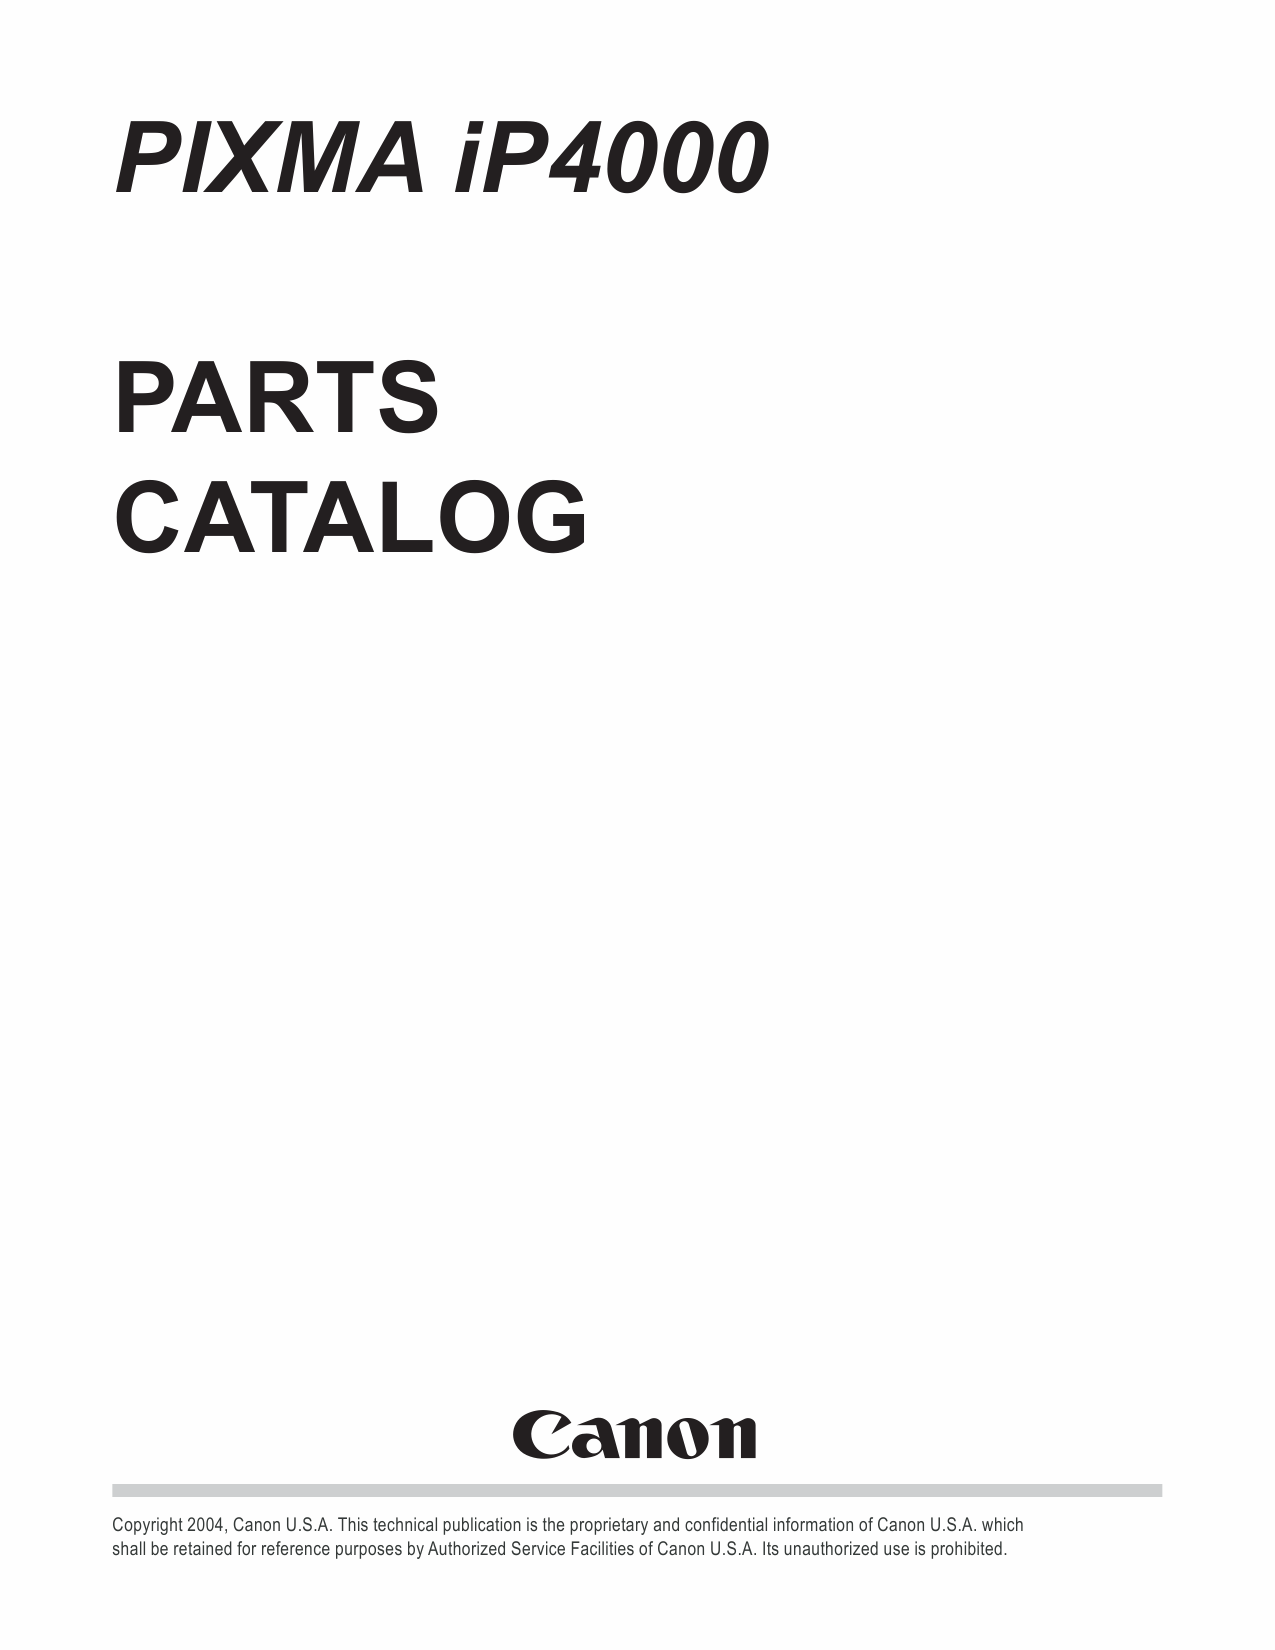 Canon PIXMA iP4000 Parts Catalog-1